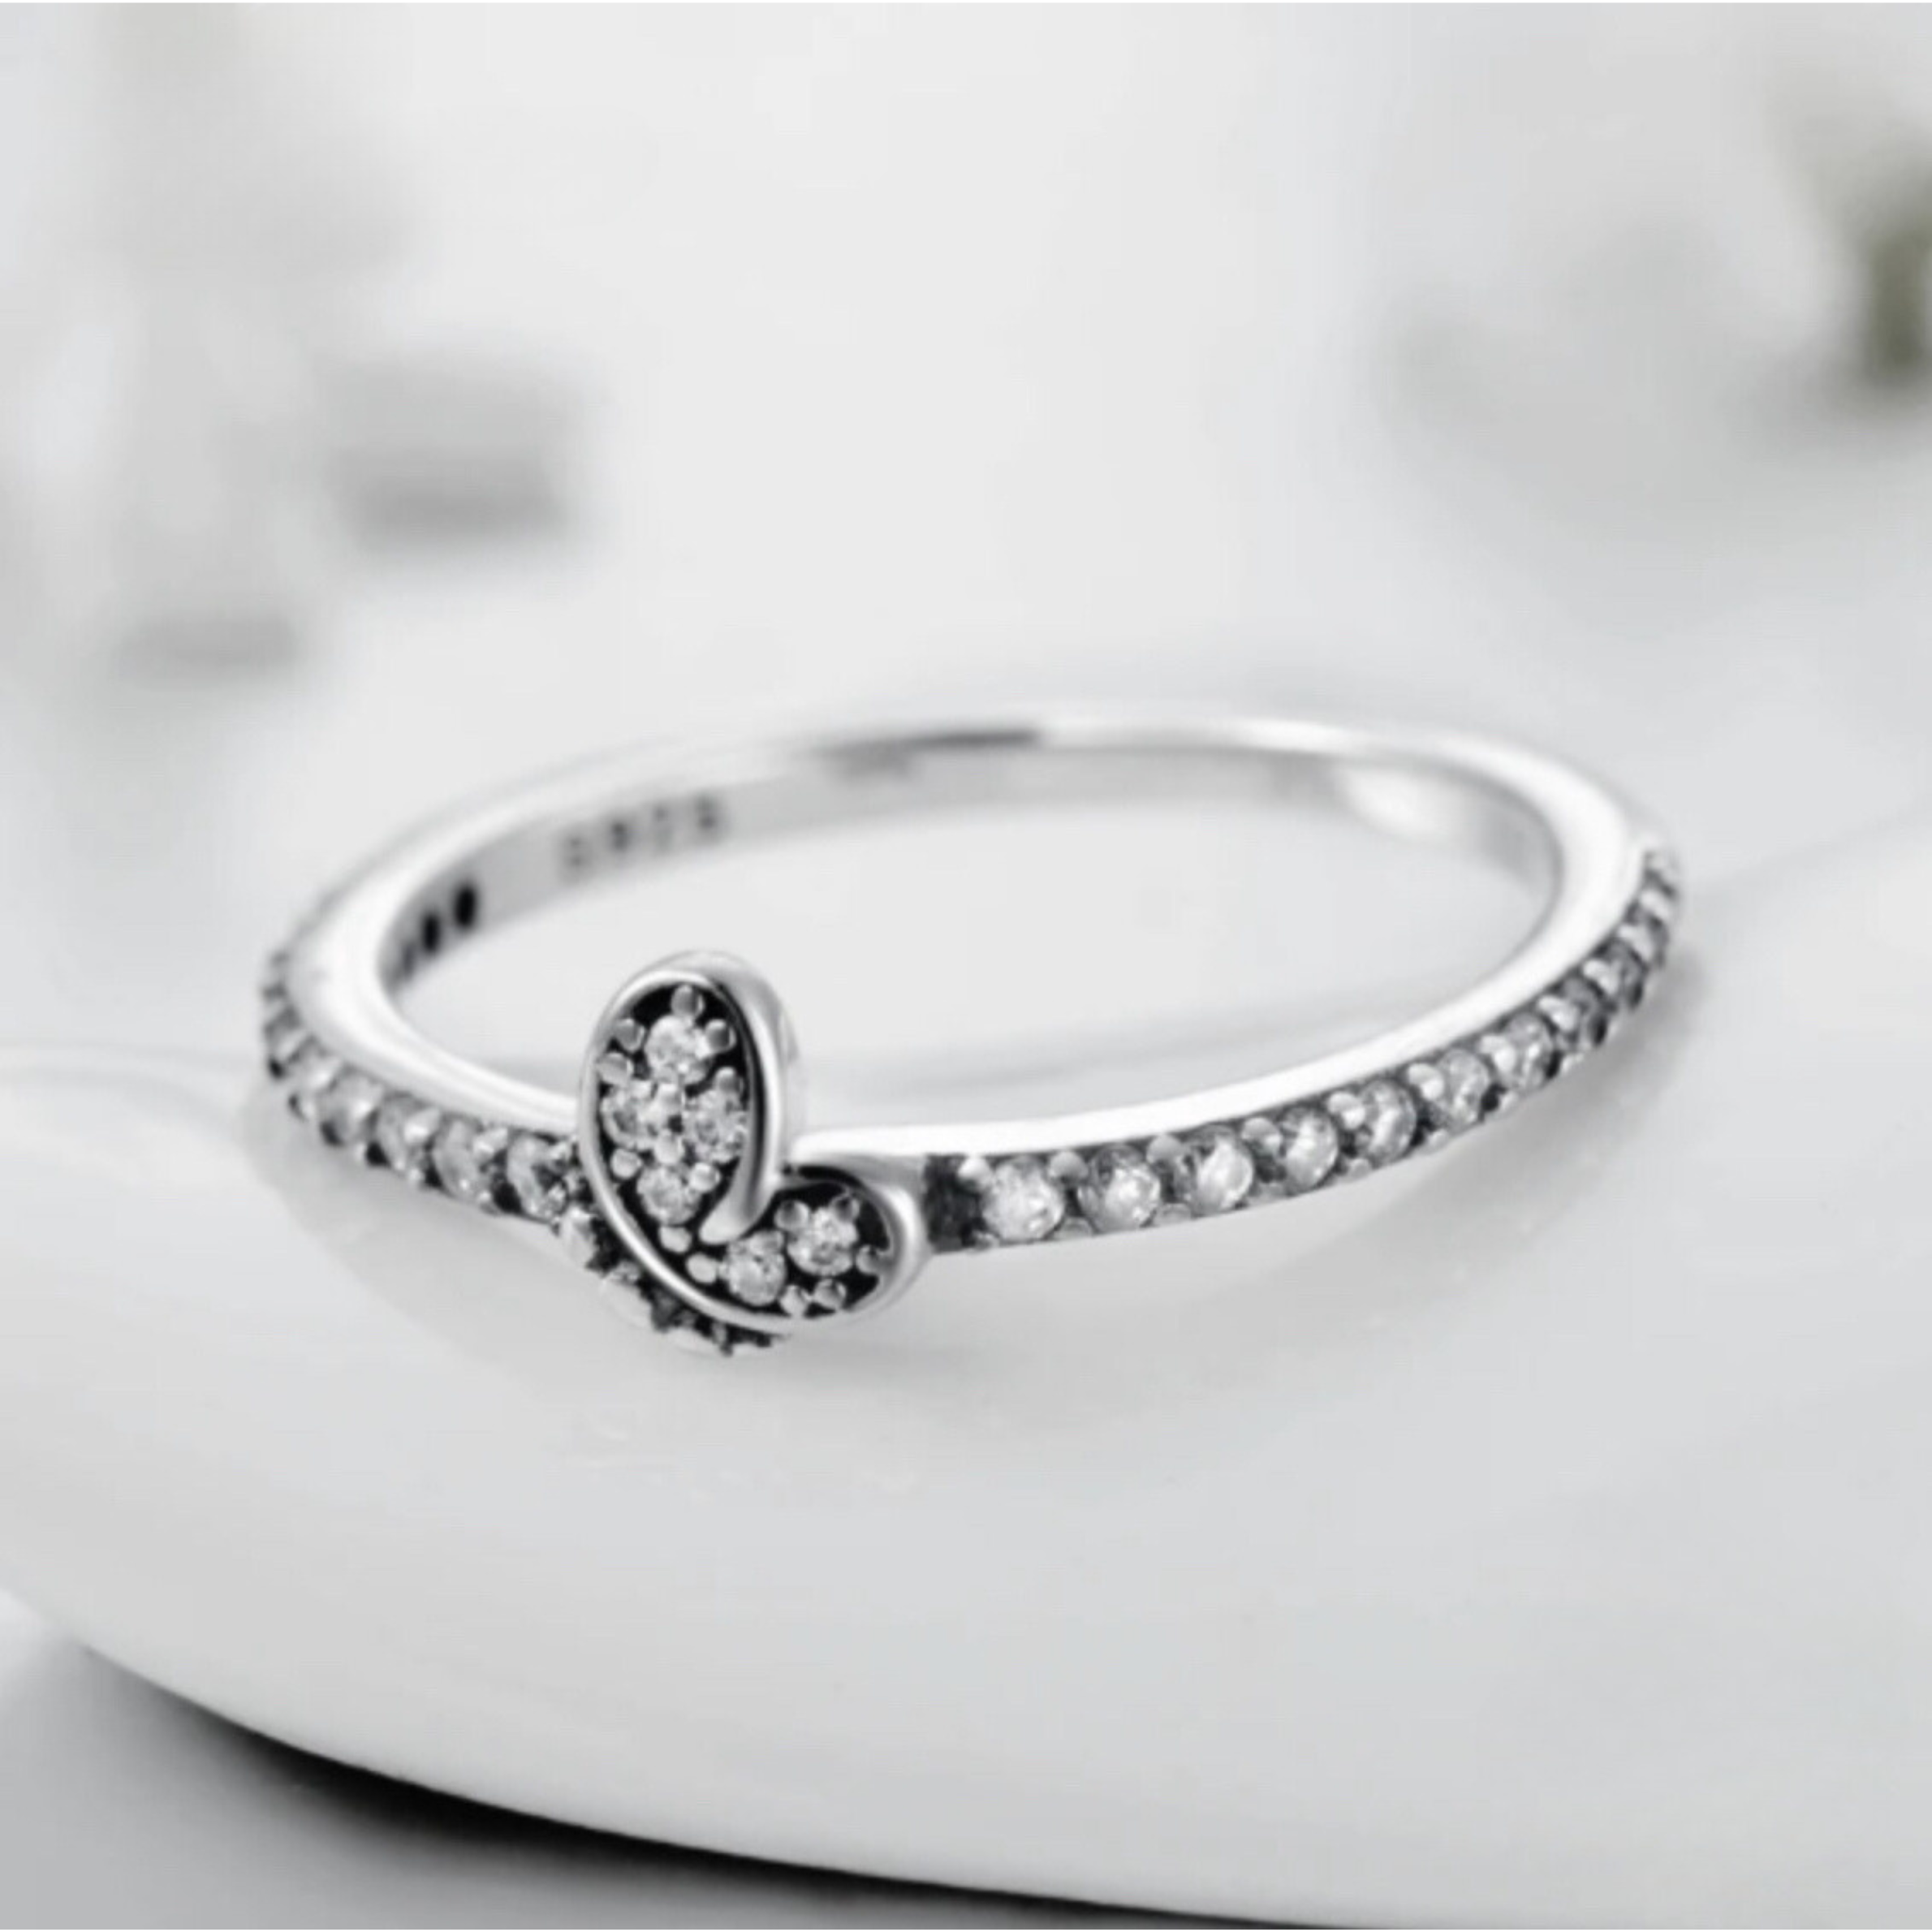 Sparkling Clear Cubic Zirconia Vintage Sterling Silver Ring | Modern Elegance